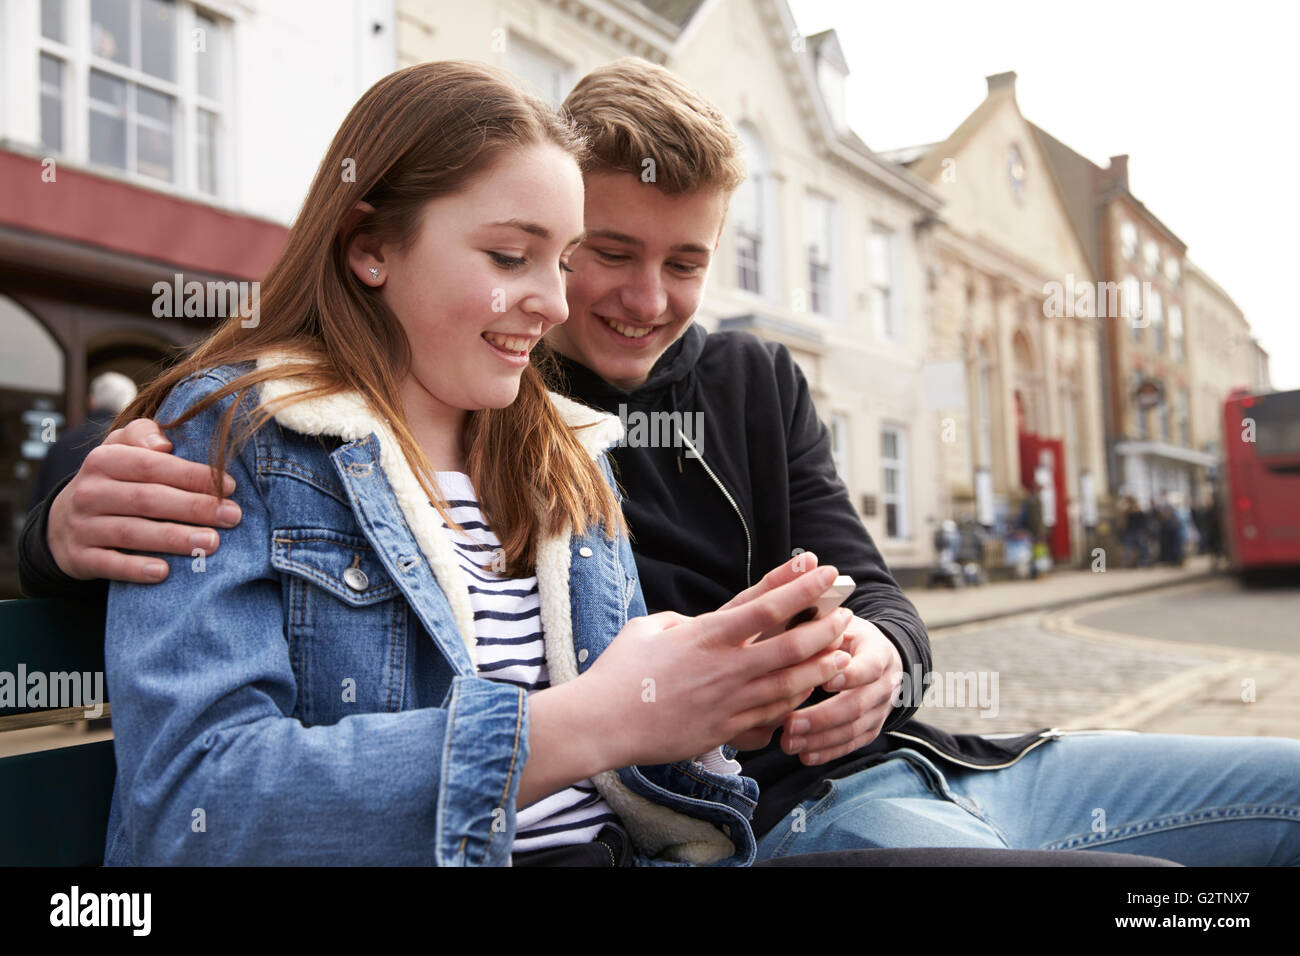 Teenage Couple Using Mobile Phone In Urban Setting Stock Photo